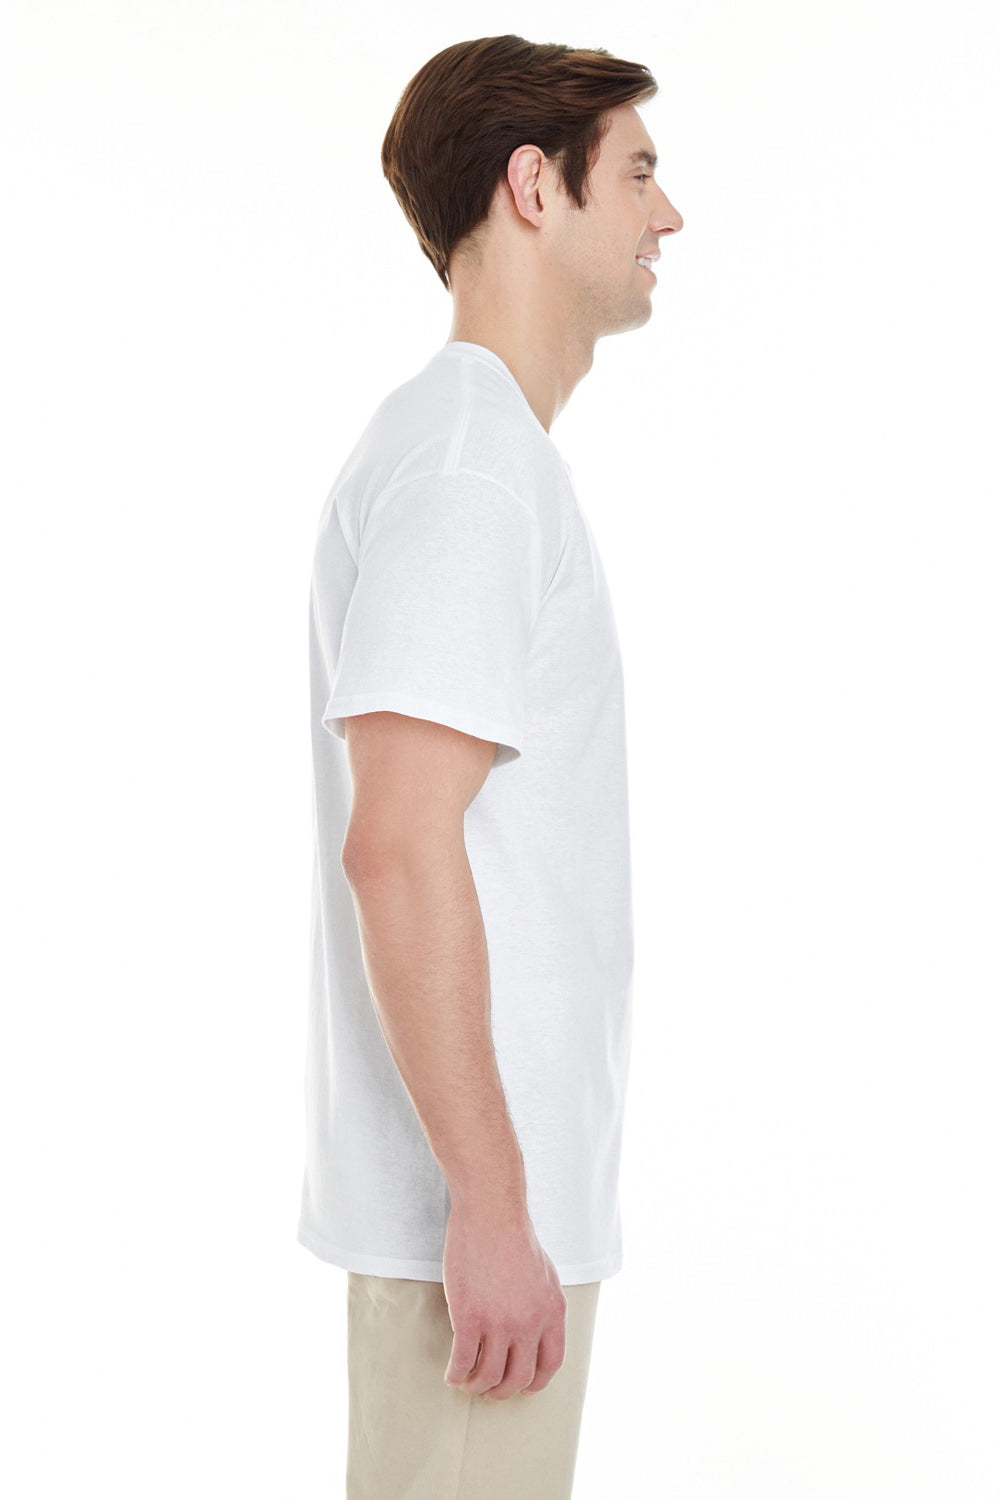 Gildan G530 Mens Short Sleeve Crewneck T-Shirt w/ Pocket White Side